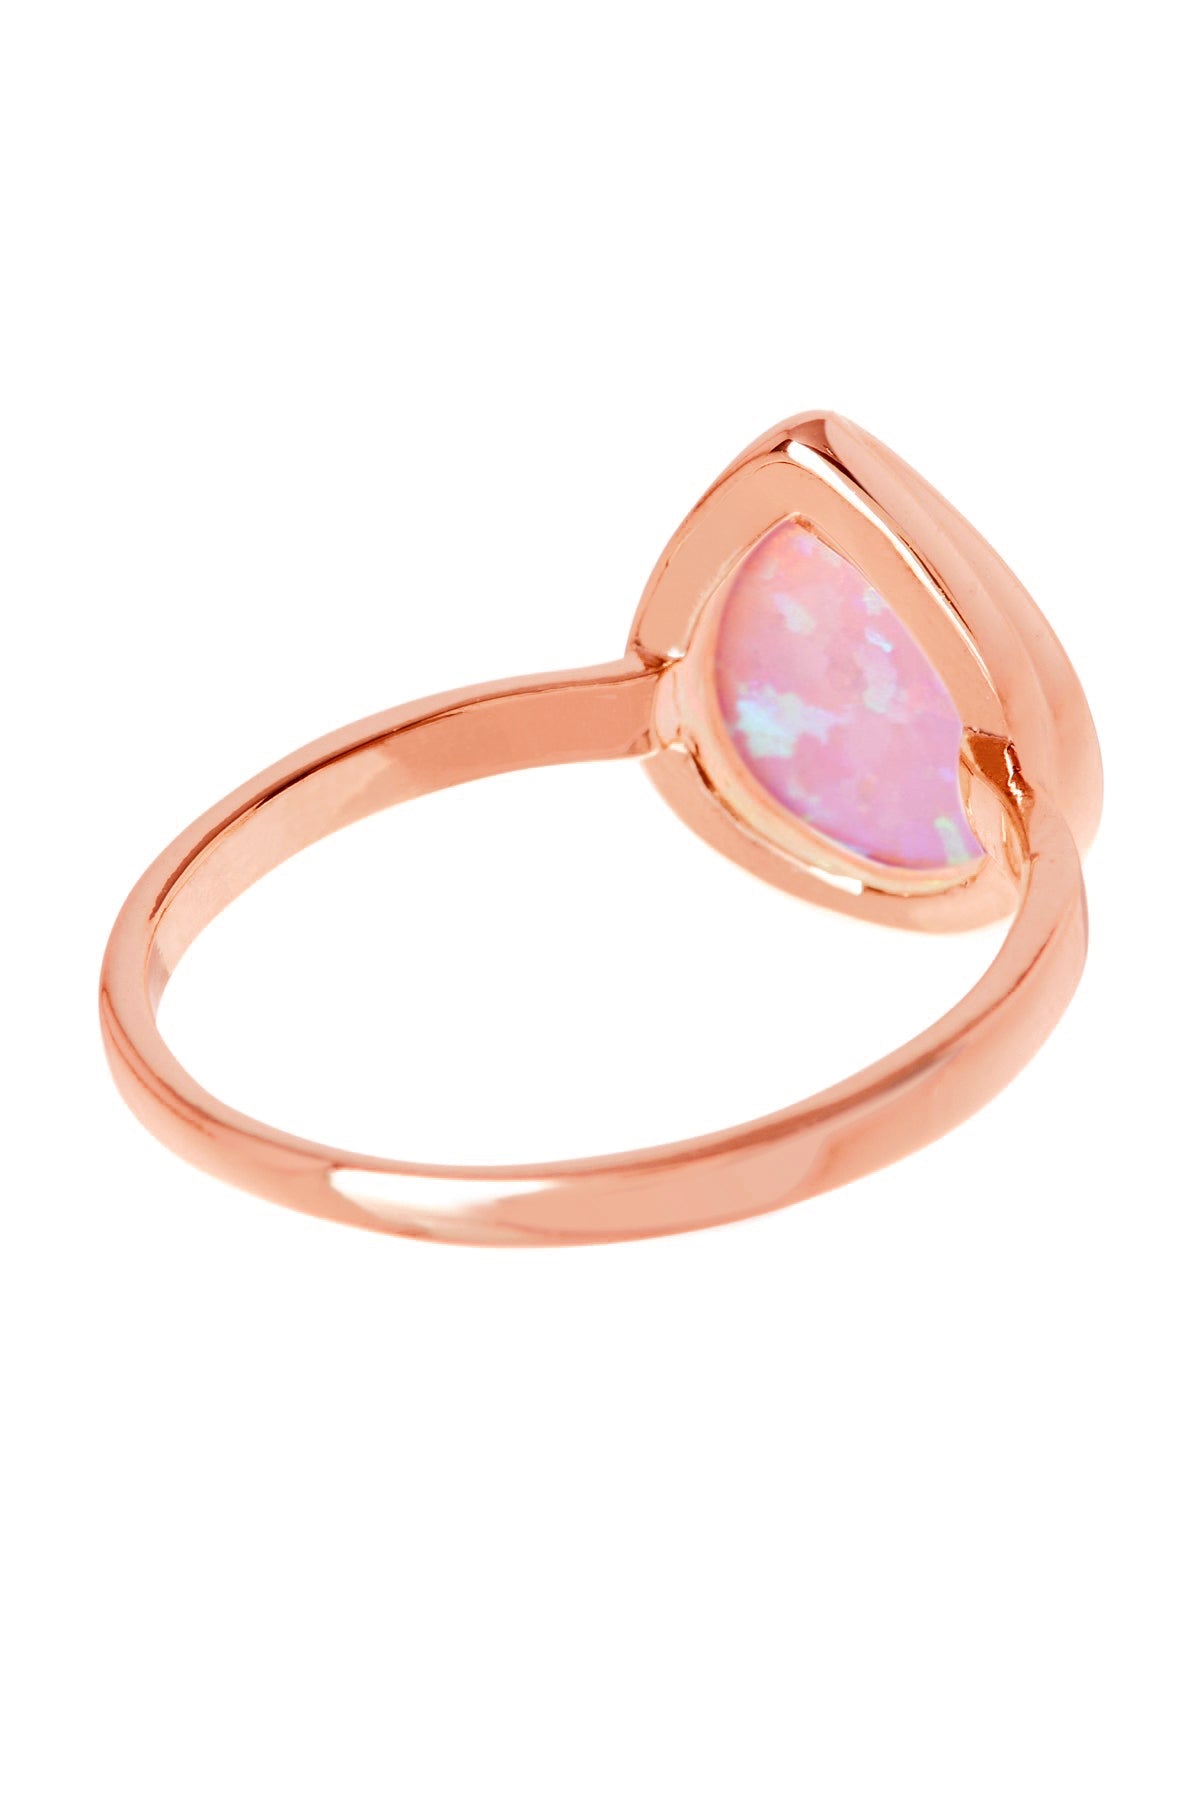 Opal Cotton Candy Teardrop Ring - RG